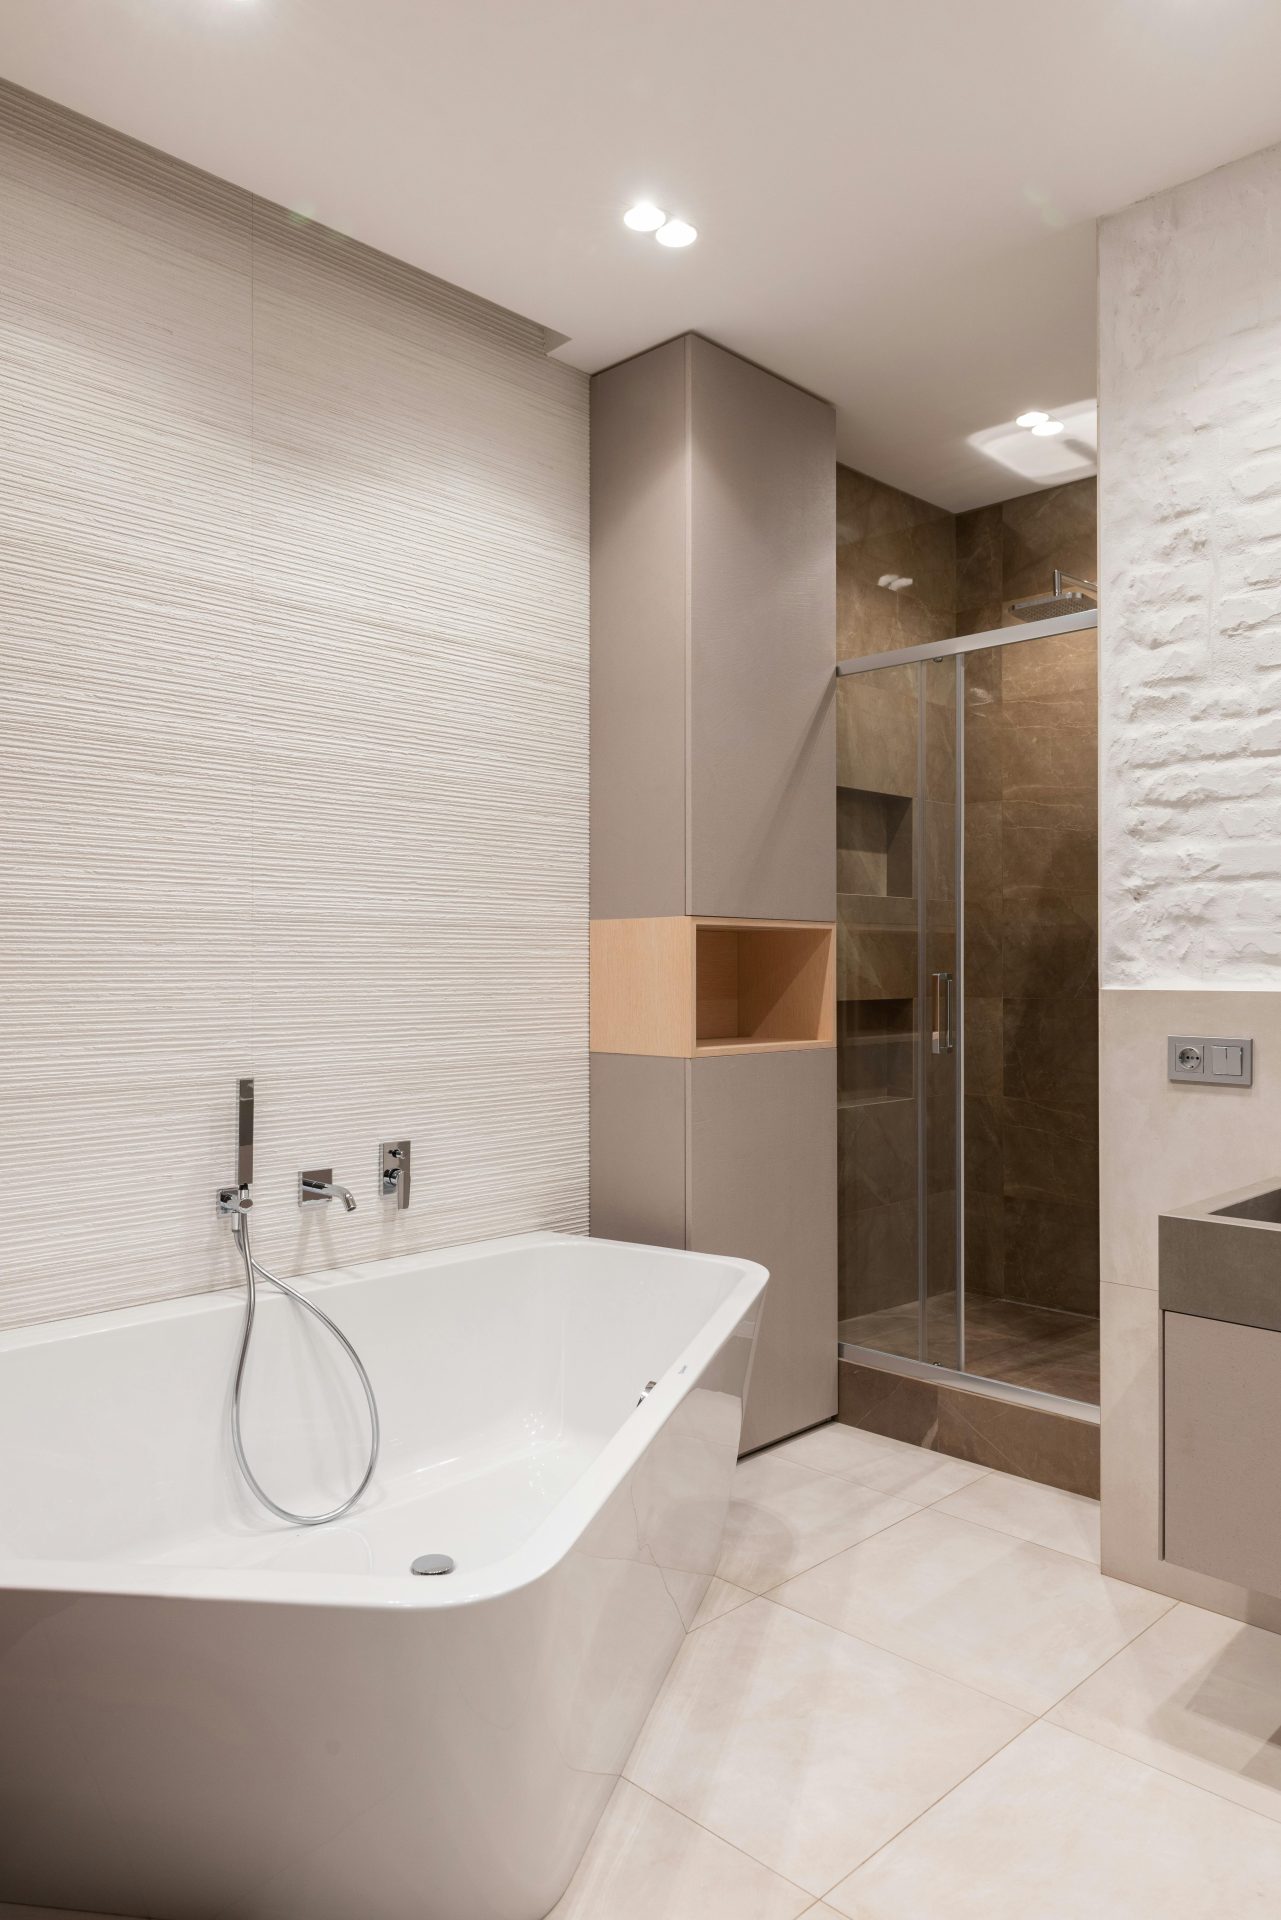 Considerations Before Choosing a Bathroom Ceiling Design